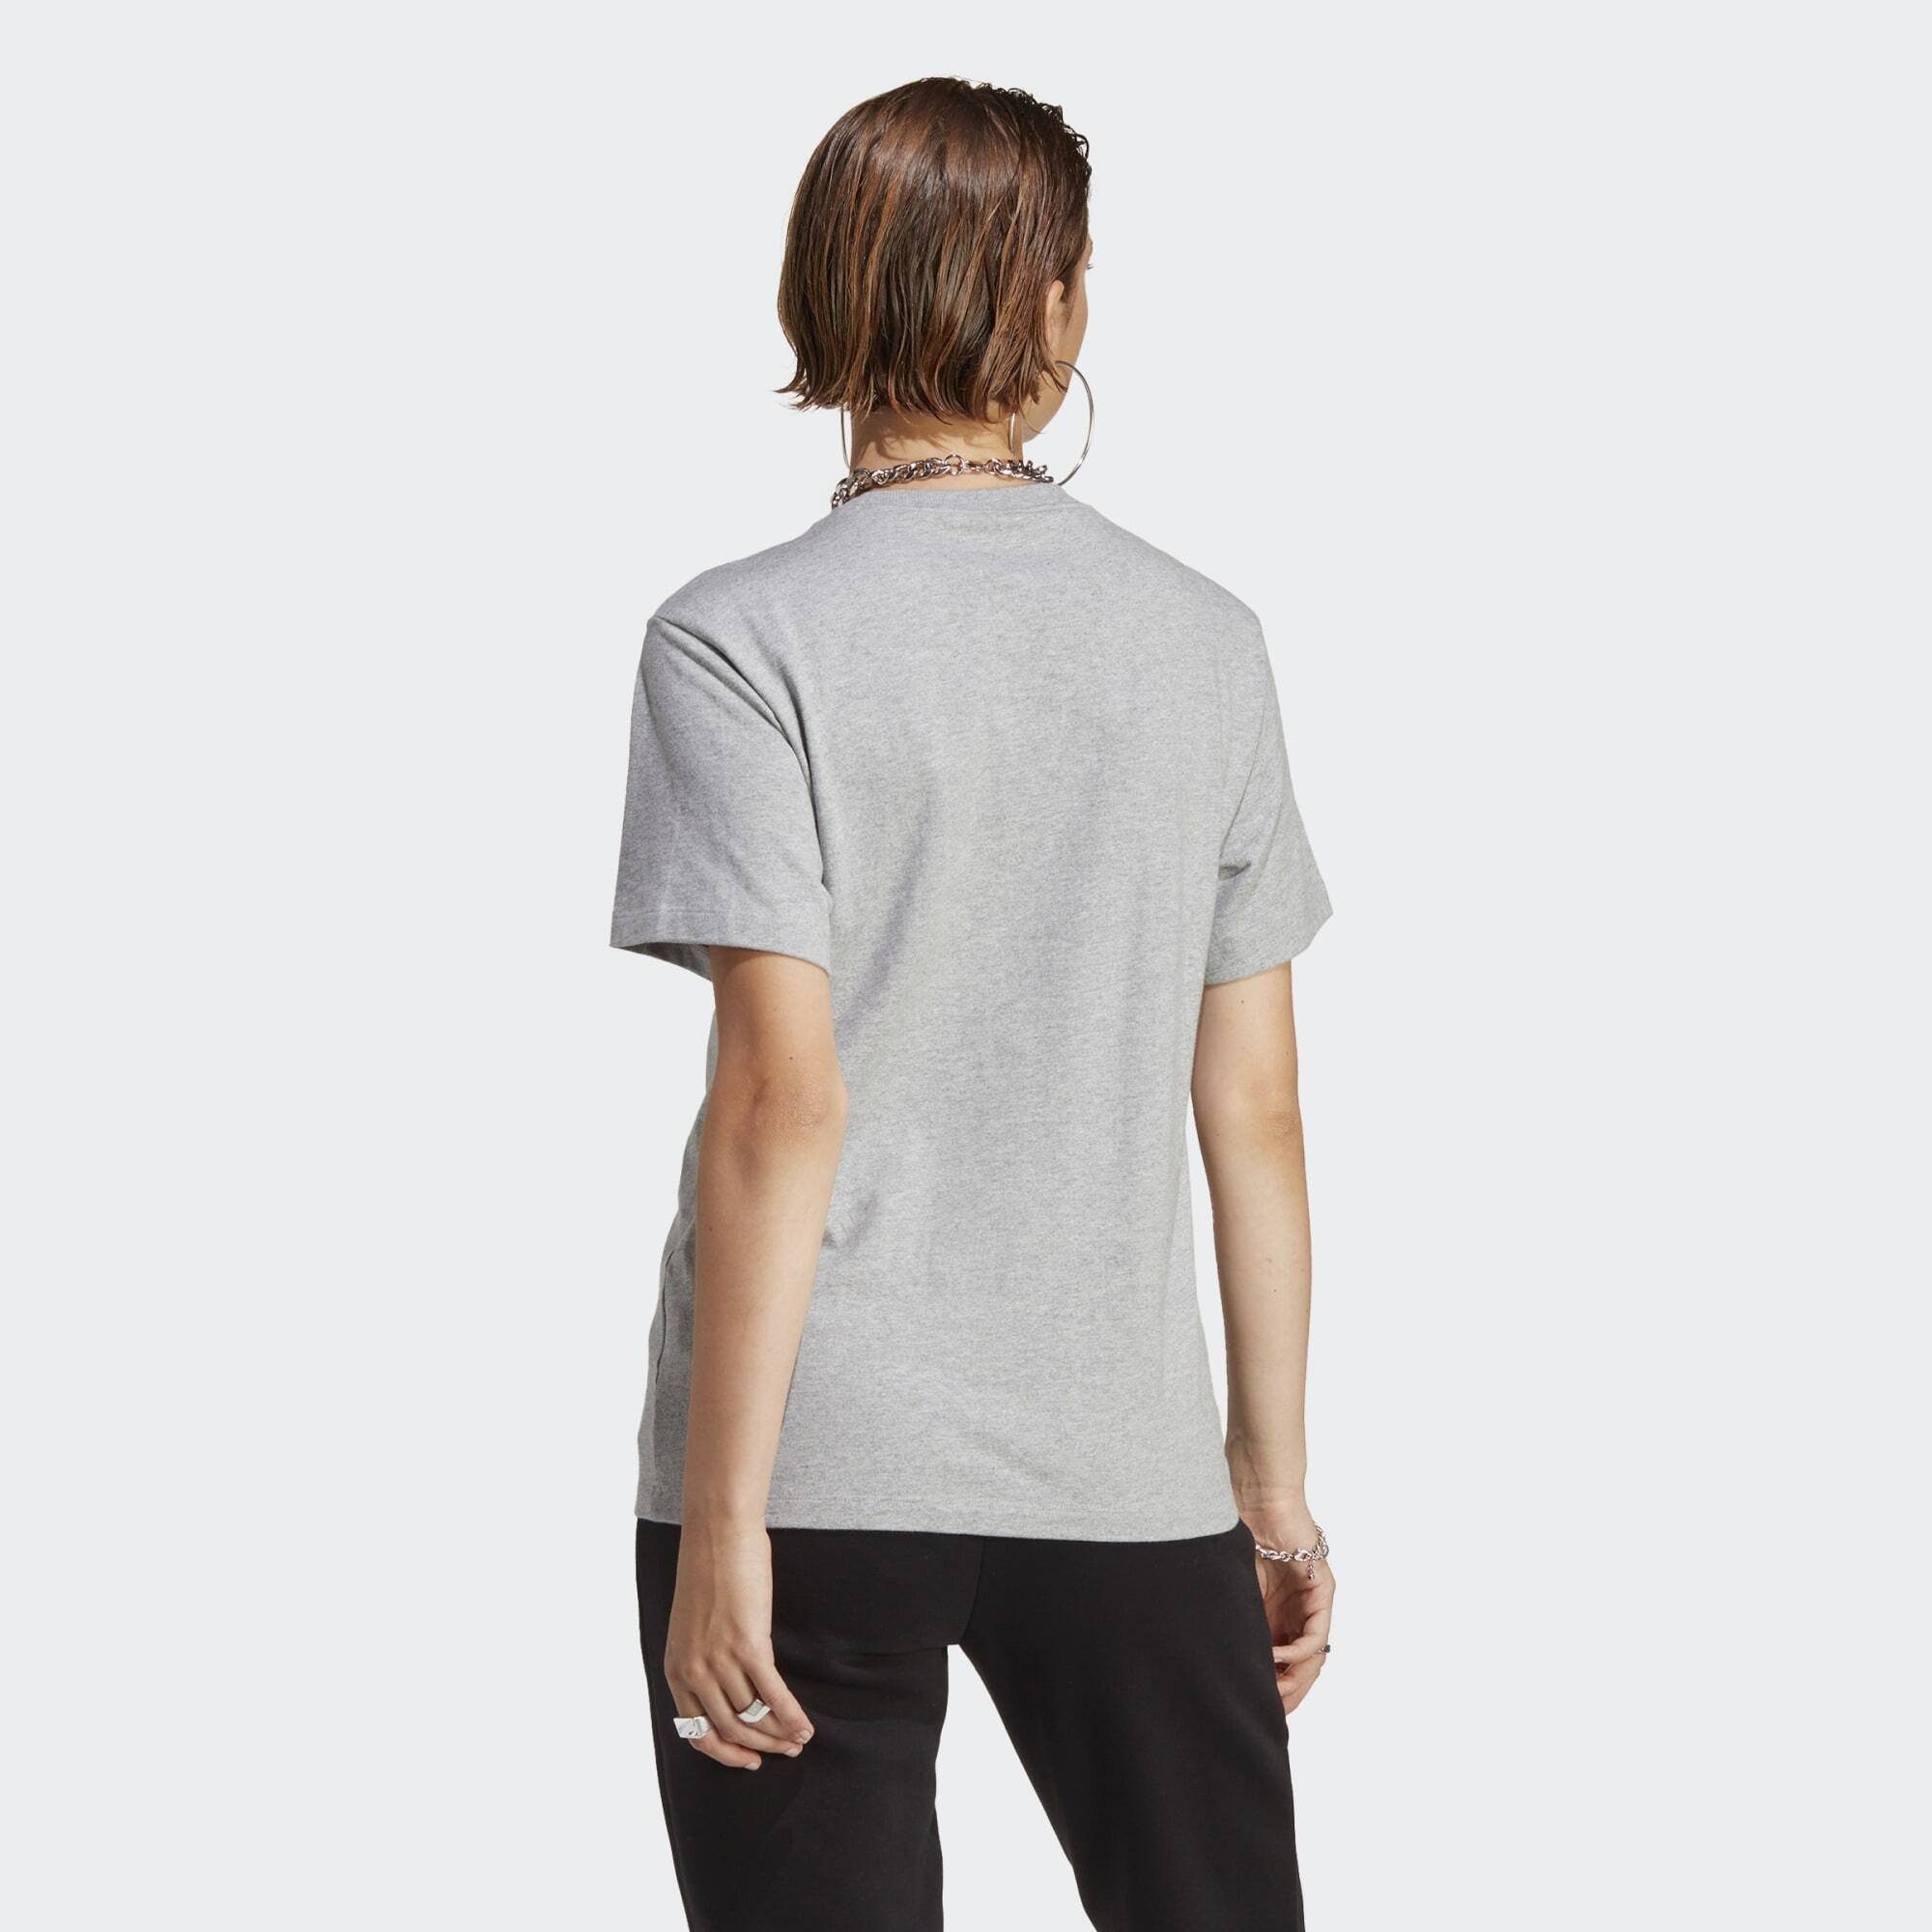 adidas Originals REGULAR Heather T-Shirt Medium T-SHIRT Grey ESSENTIALS ADICOLOR